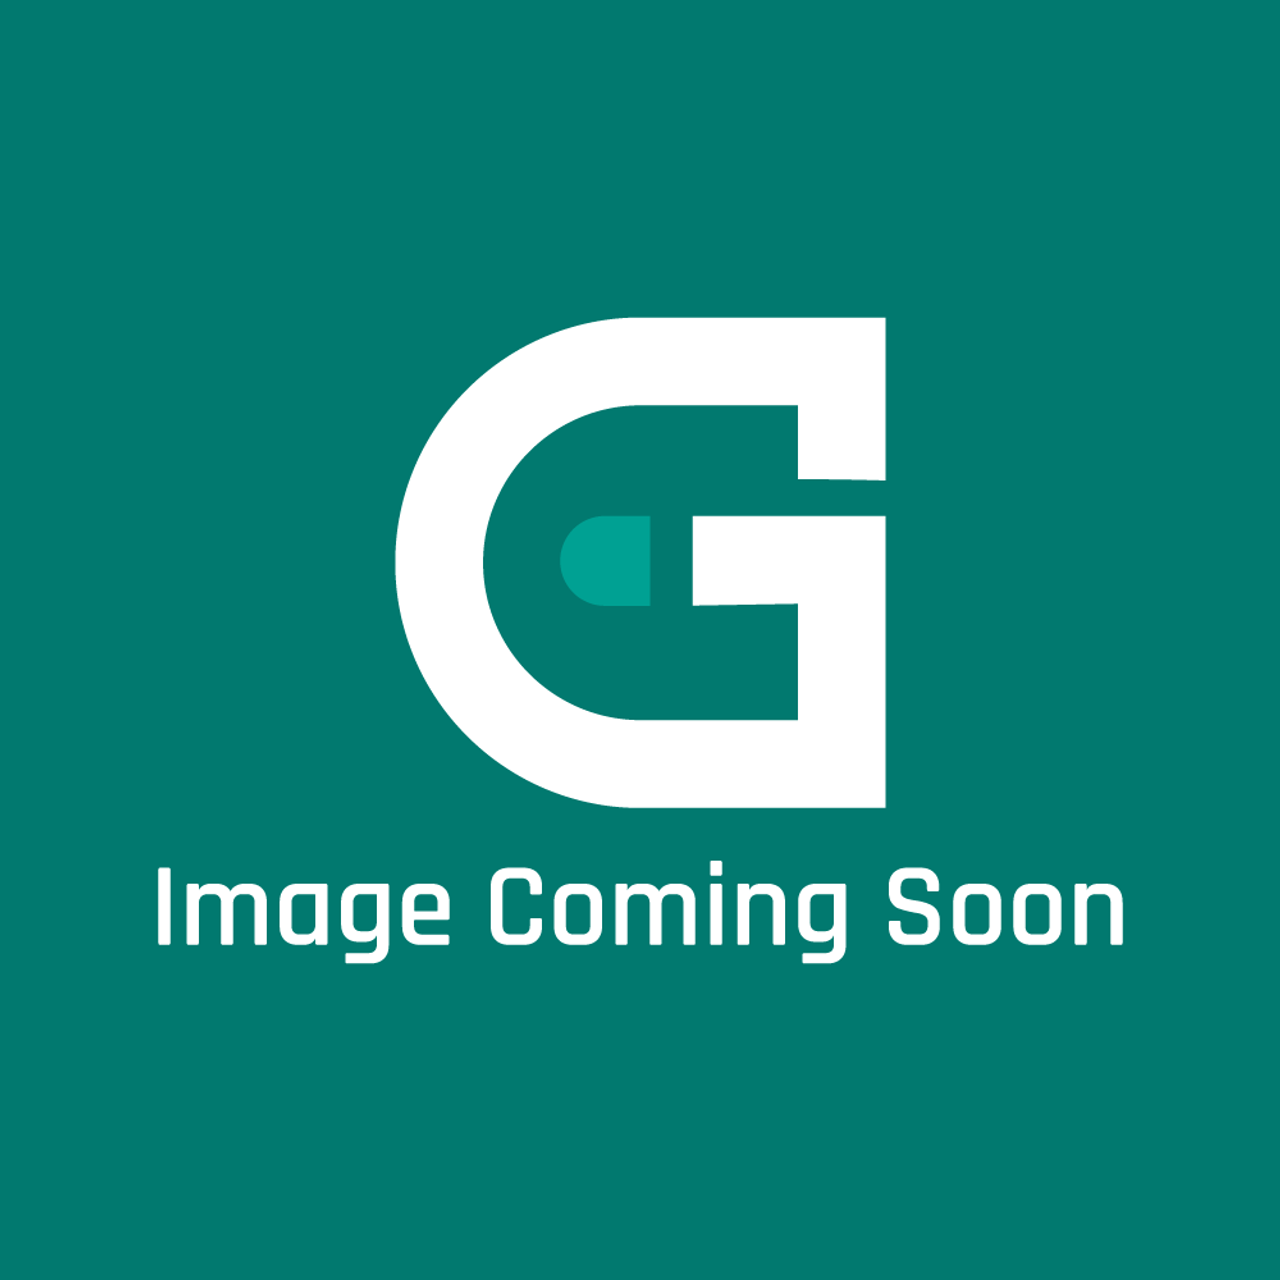 GE Appliances WB27X10558 - Trans Hv - Image Coming Soon!